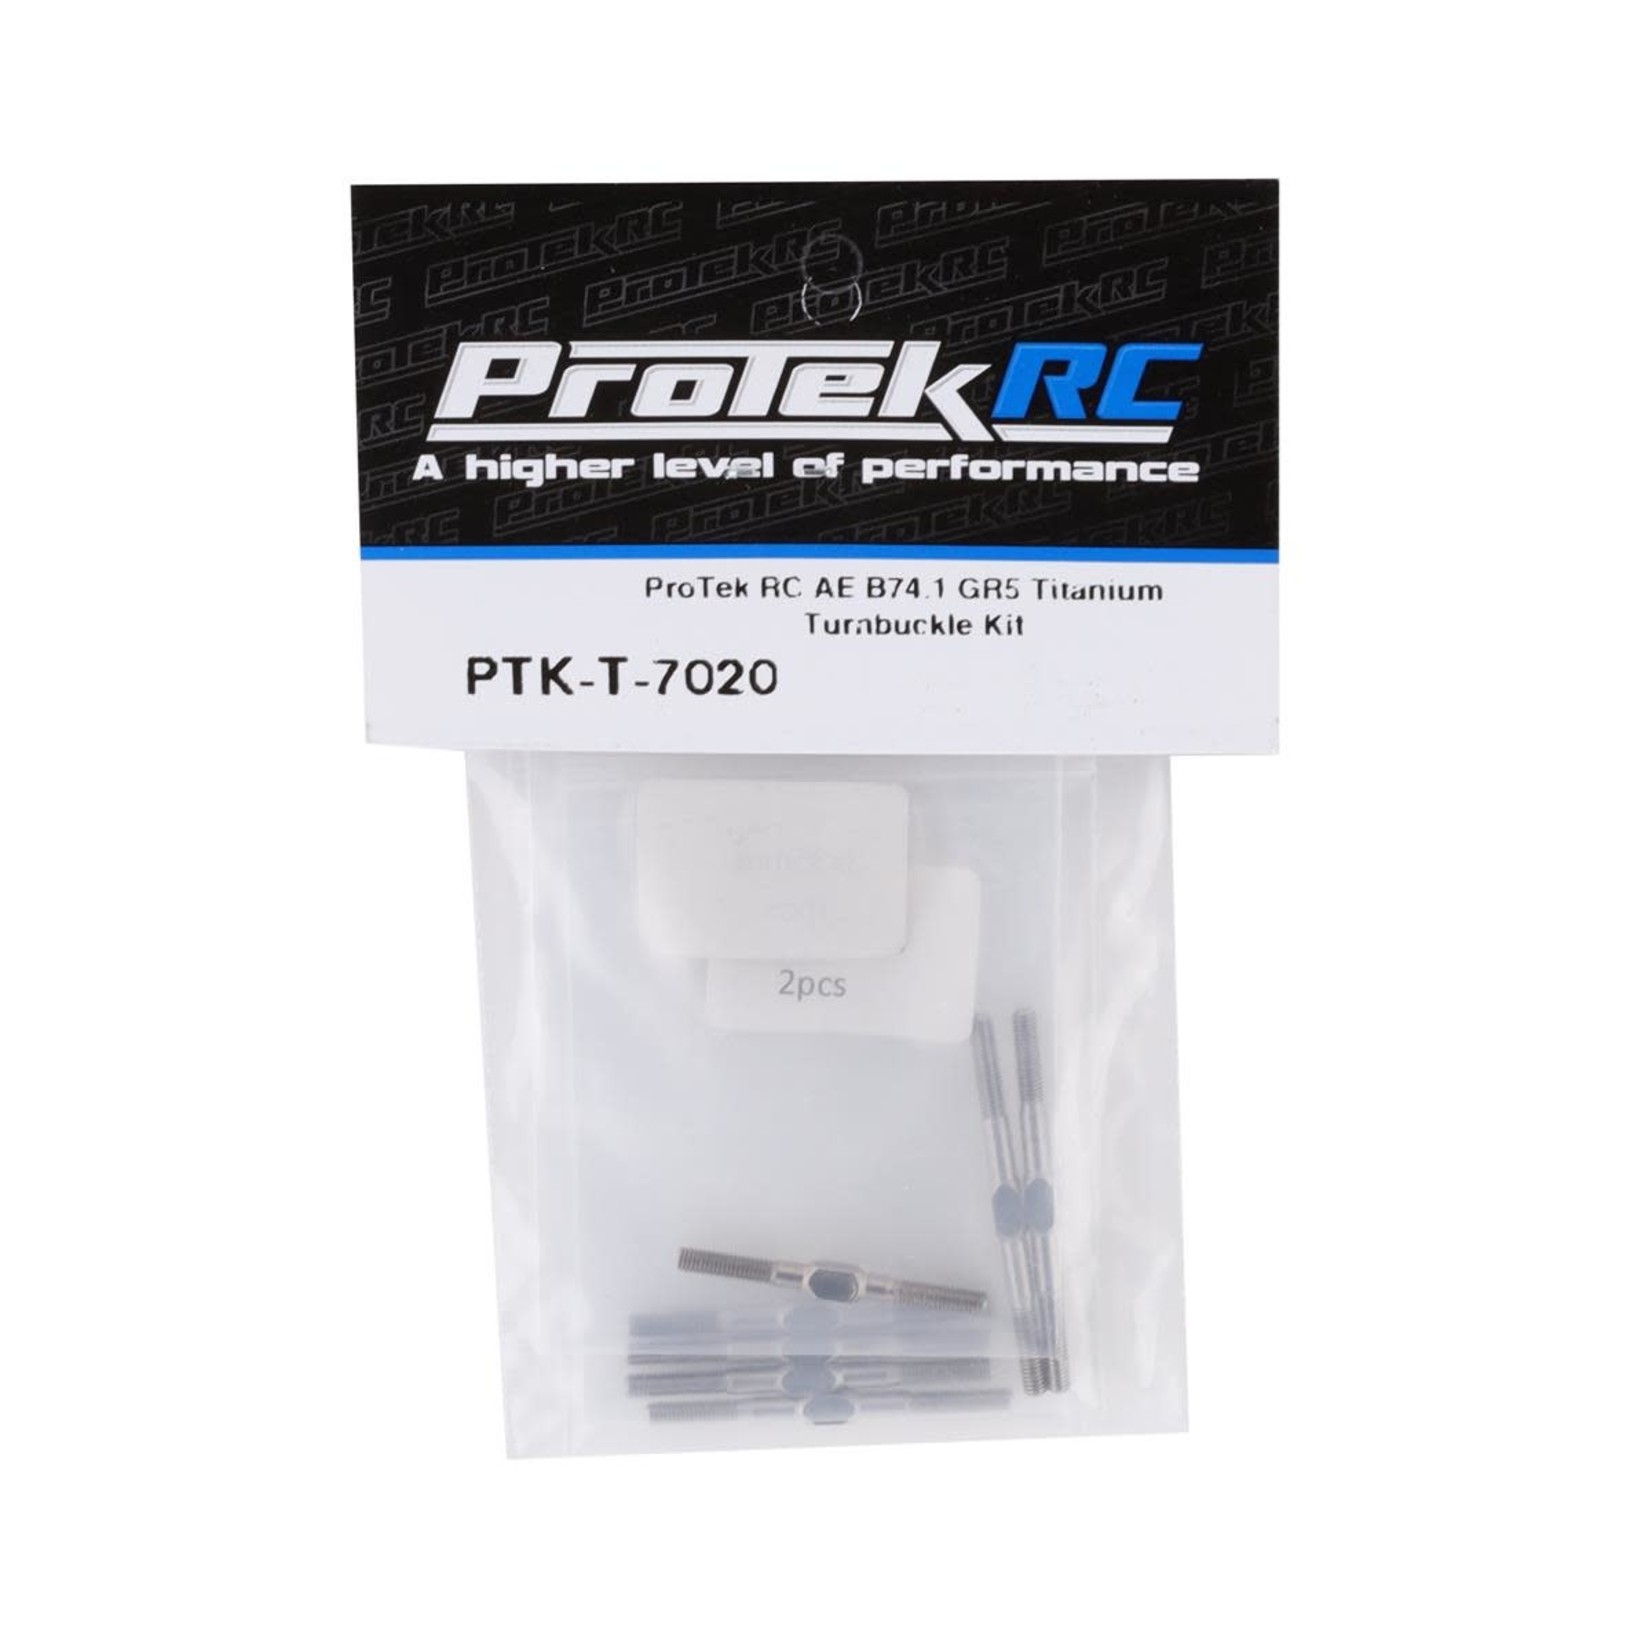 ProTek RC ProTek RC AE B74.1 GR5 Titanium Turnbuckle Kit #PTK-T-7020